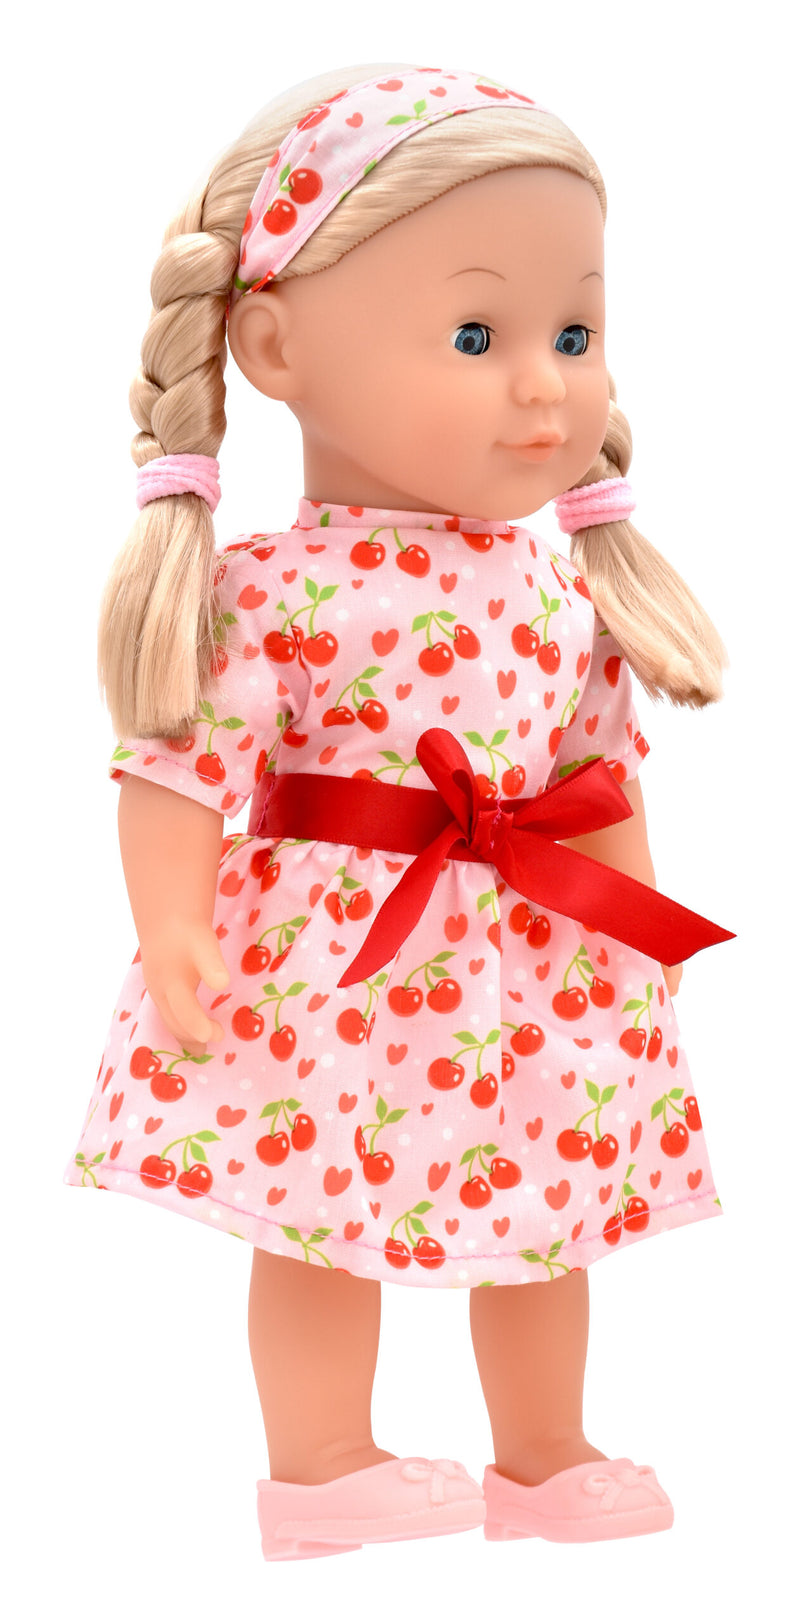 Dollsworld Charlotte Braided Blonde Hair Dolll 36cm (14") with Accessories (7769906512027)